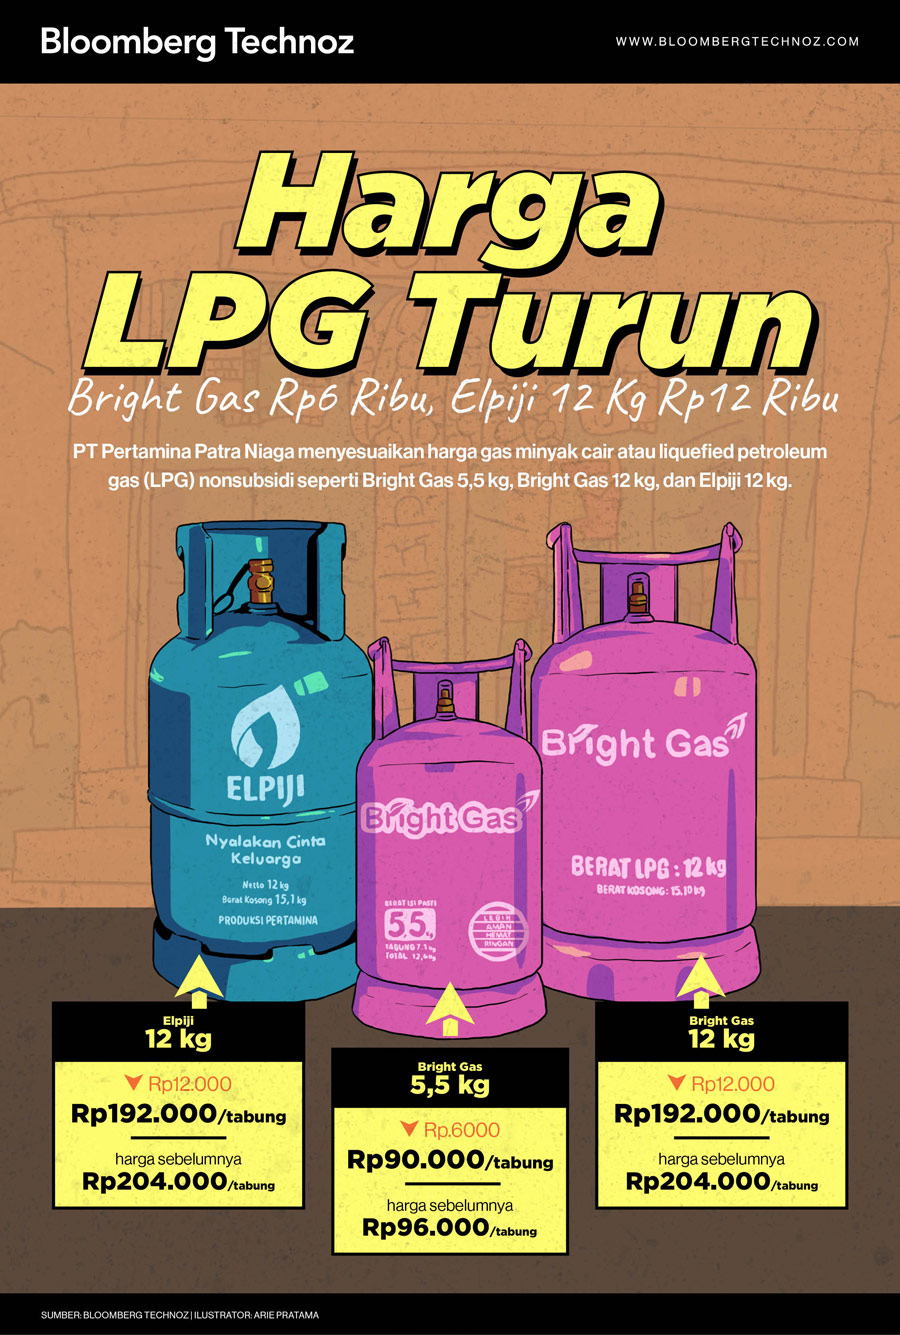 Harga LPG Turun: Bright Gas Rp6 Ribu, Elpiji 12 Kg Rp12 Ribu (Arie Pratama/Bloomberg Technoz)